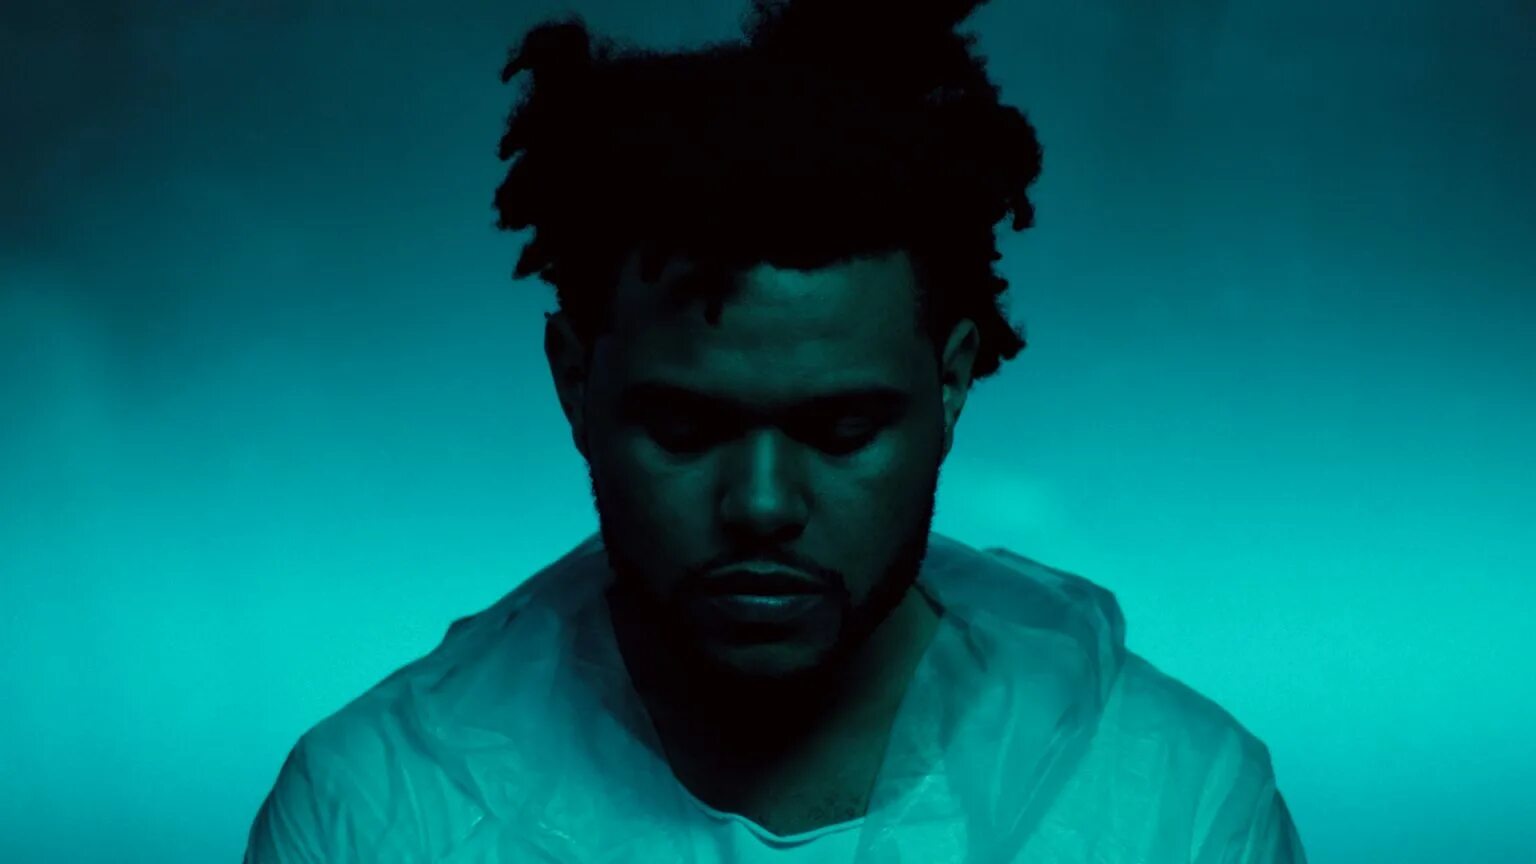 Earning it the weekend. The Weeknd. Weekend. The Weeknd 2015. The Weeknd Drake.